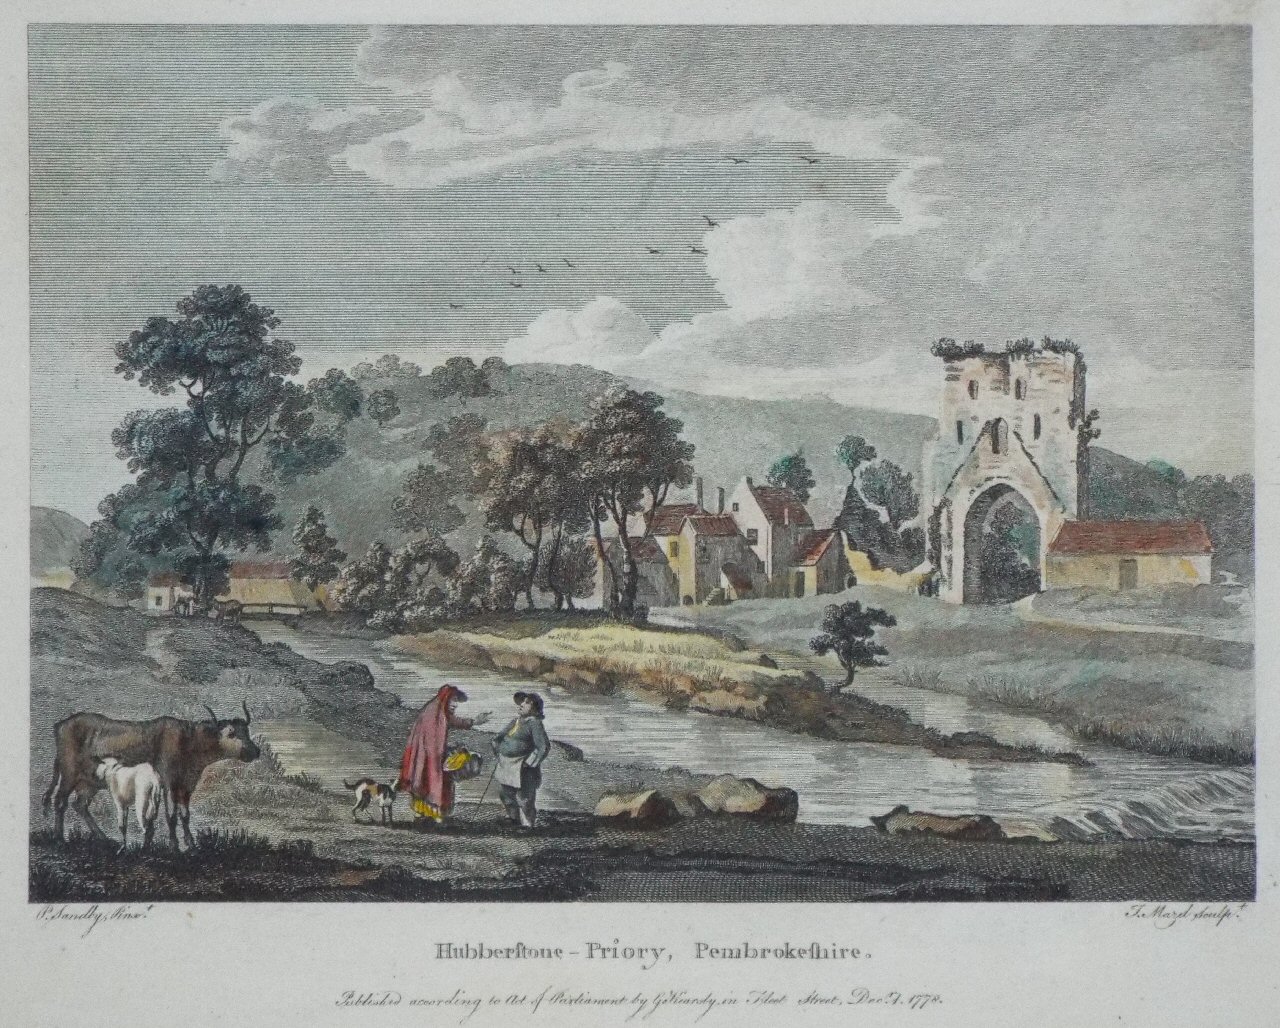 Print - Hubberstone - Priory, Pembrokeshire. - Mazel